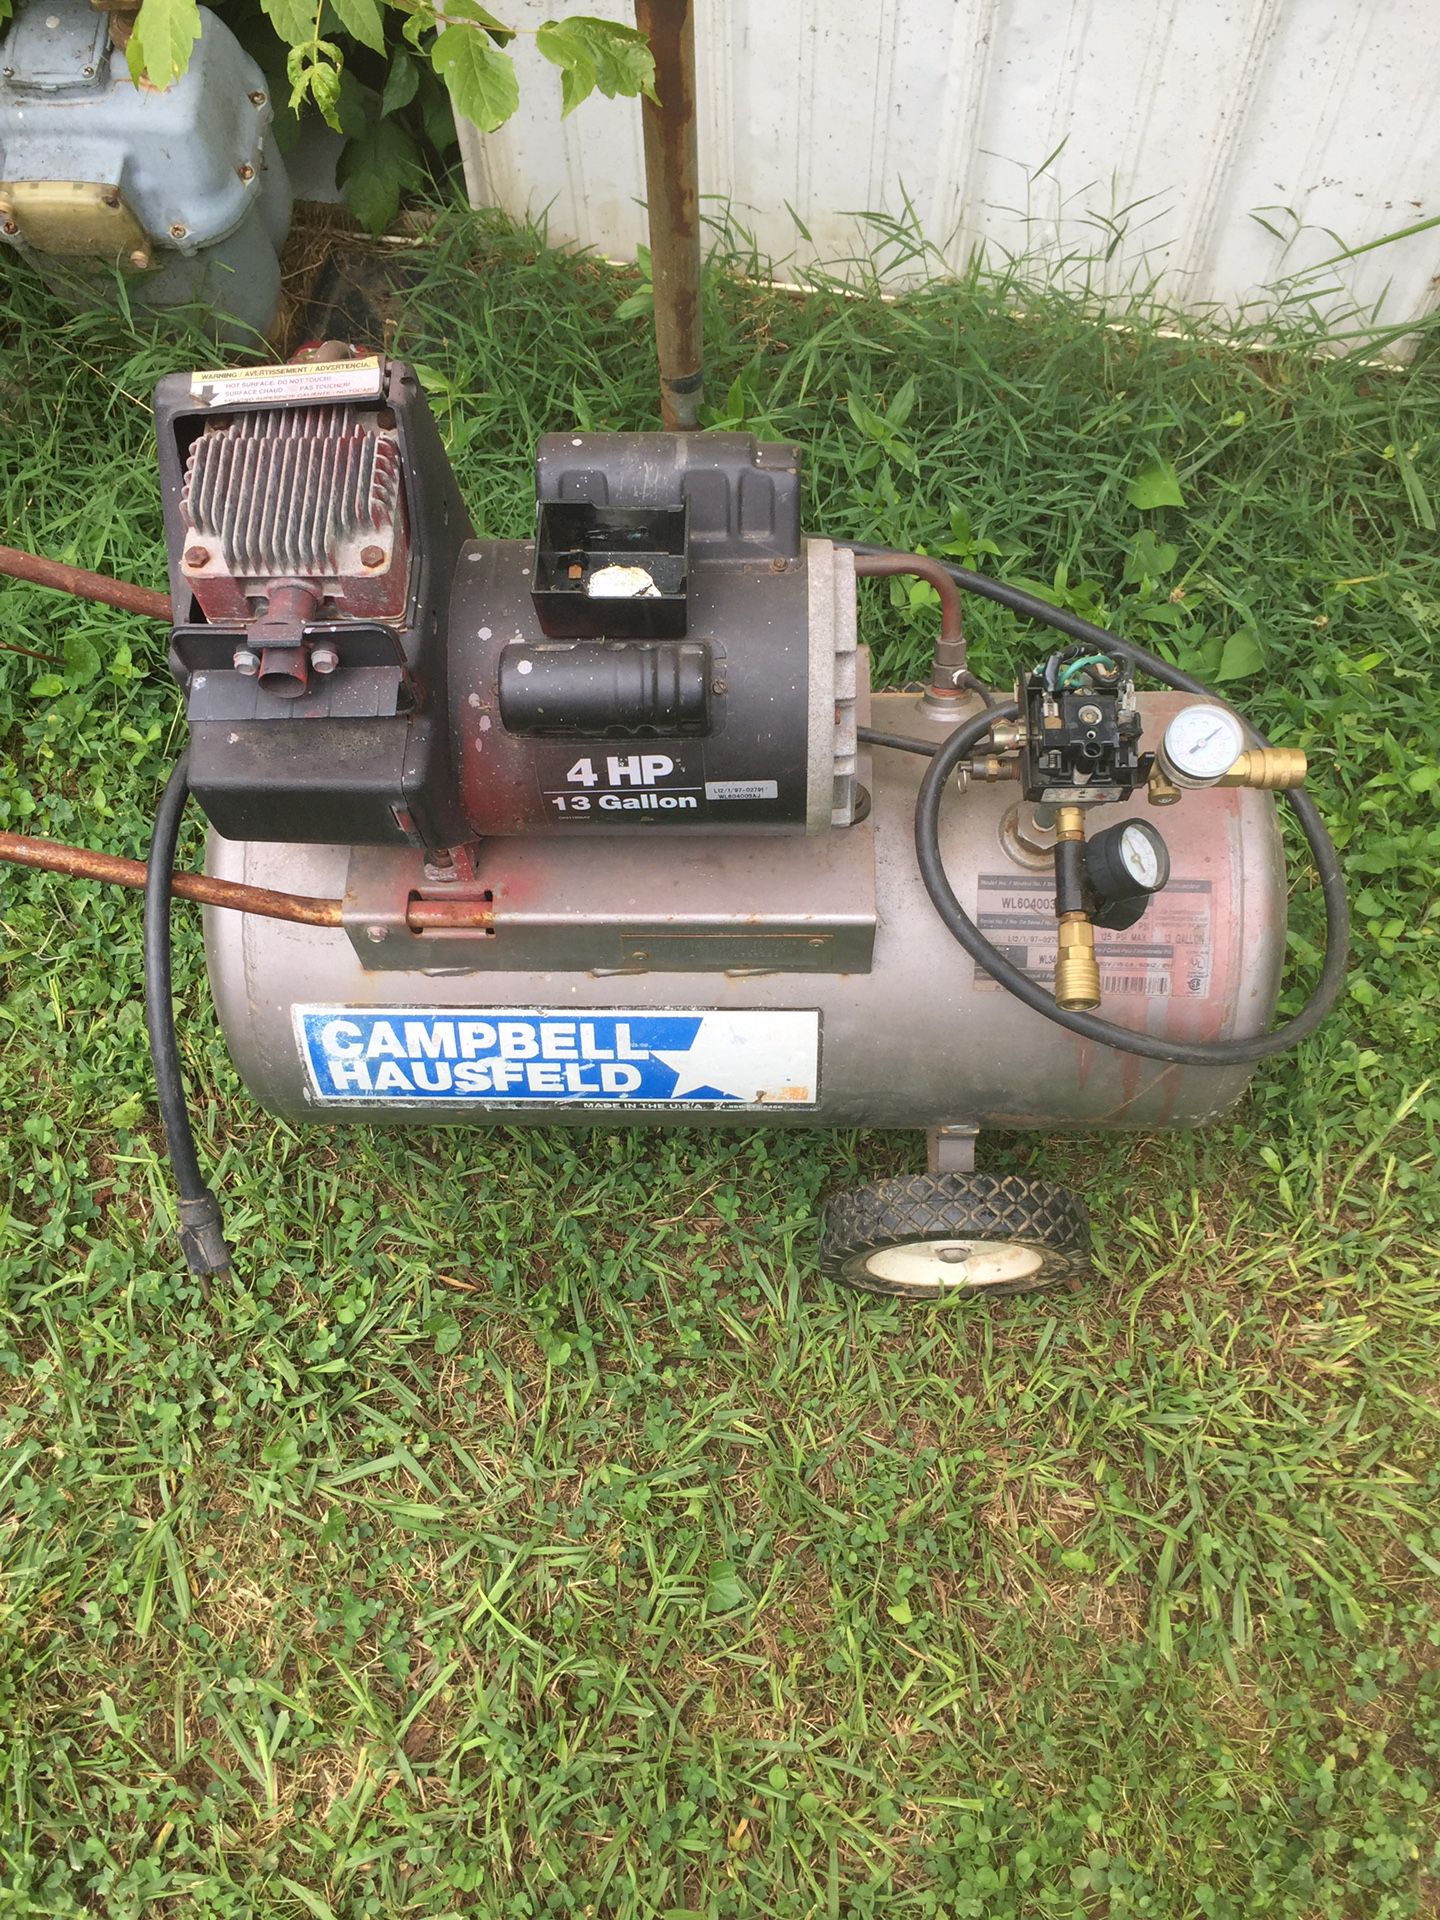 Campbell hausfeld 4 hp 13 gallon air compressor